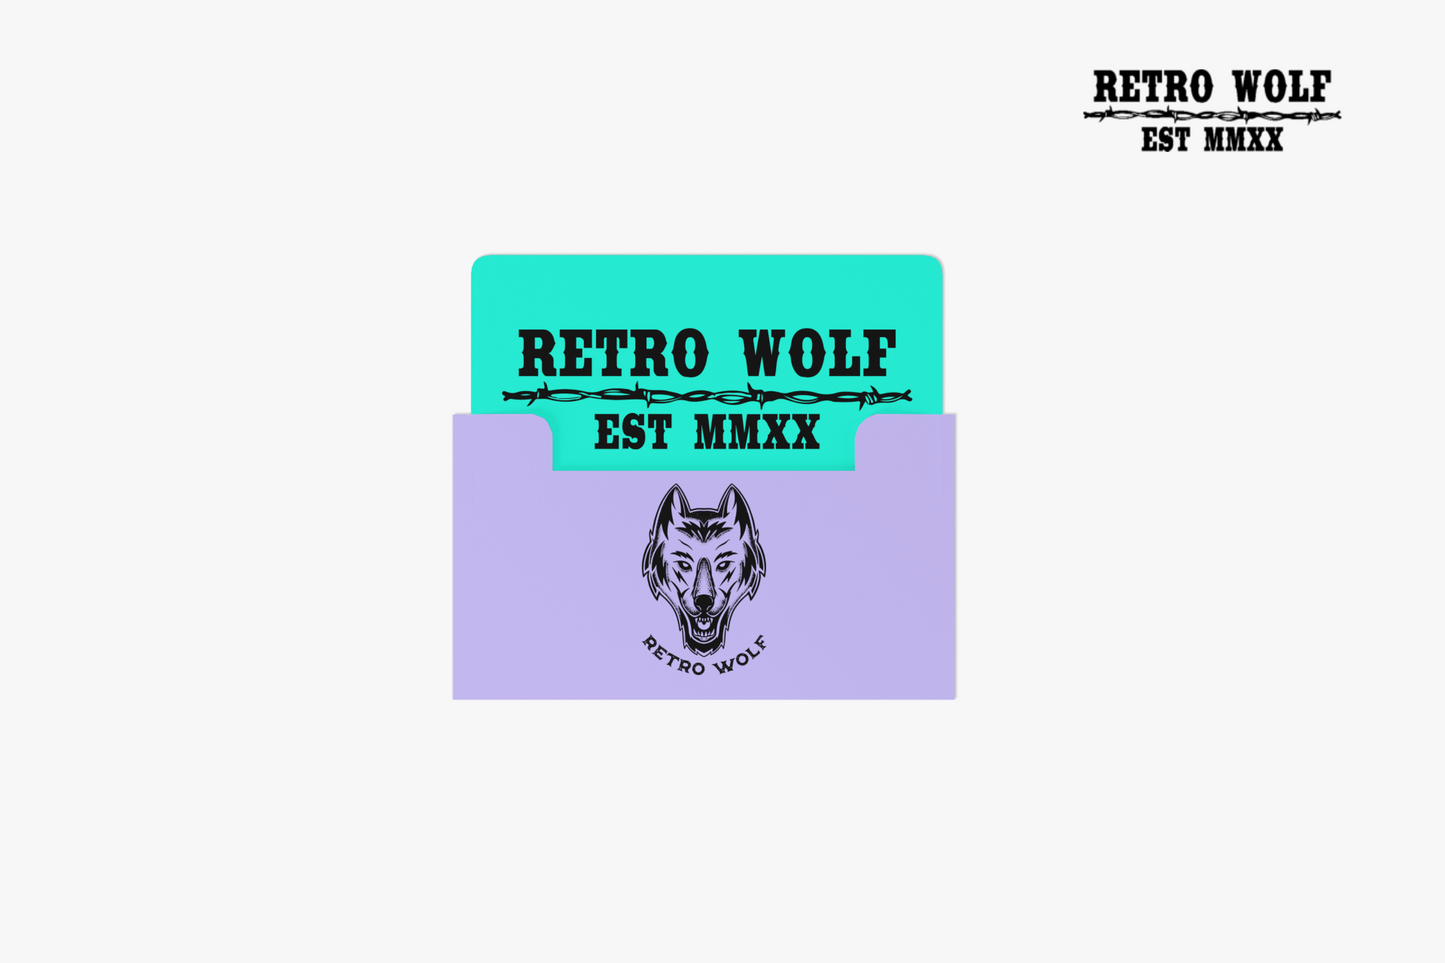 RETRO WOLF GIFT CARD